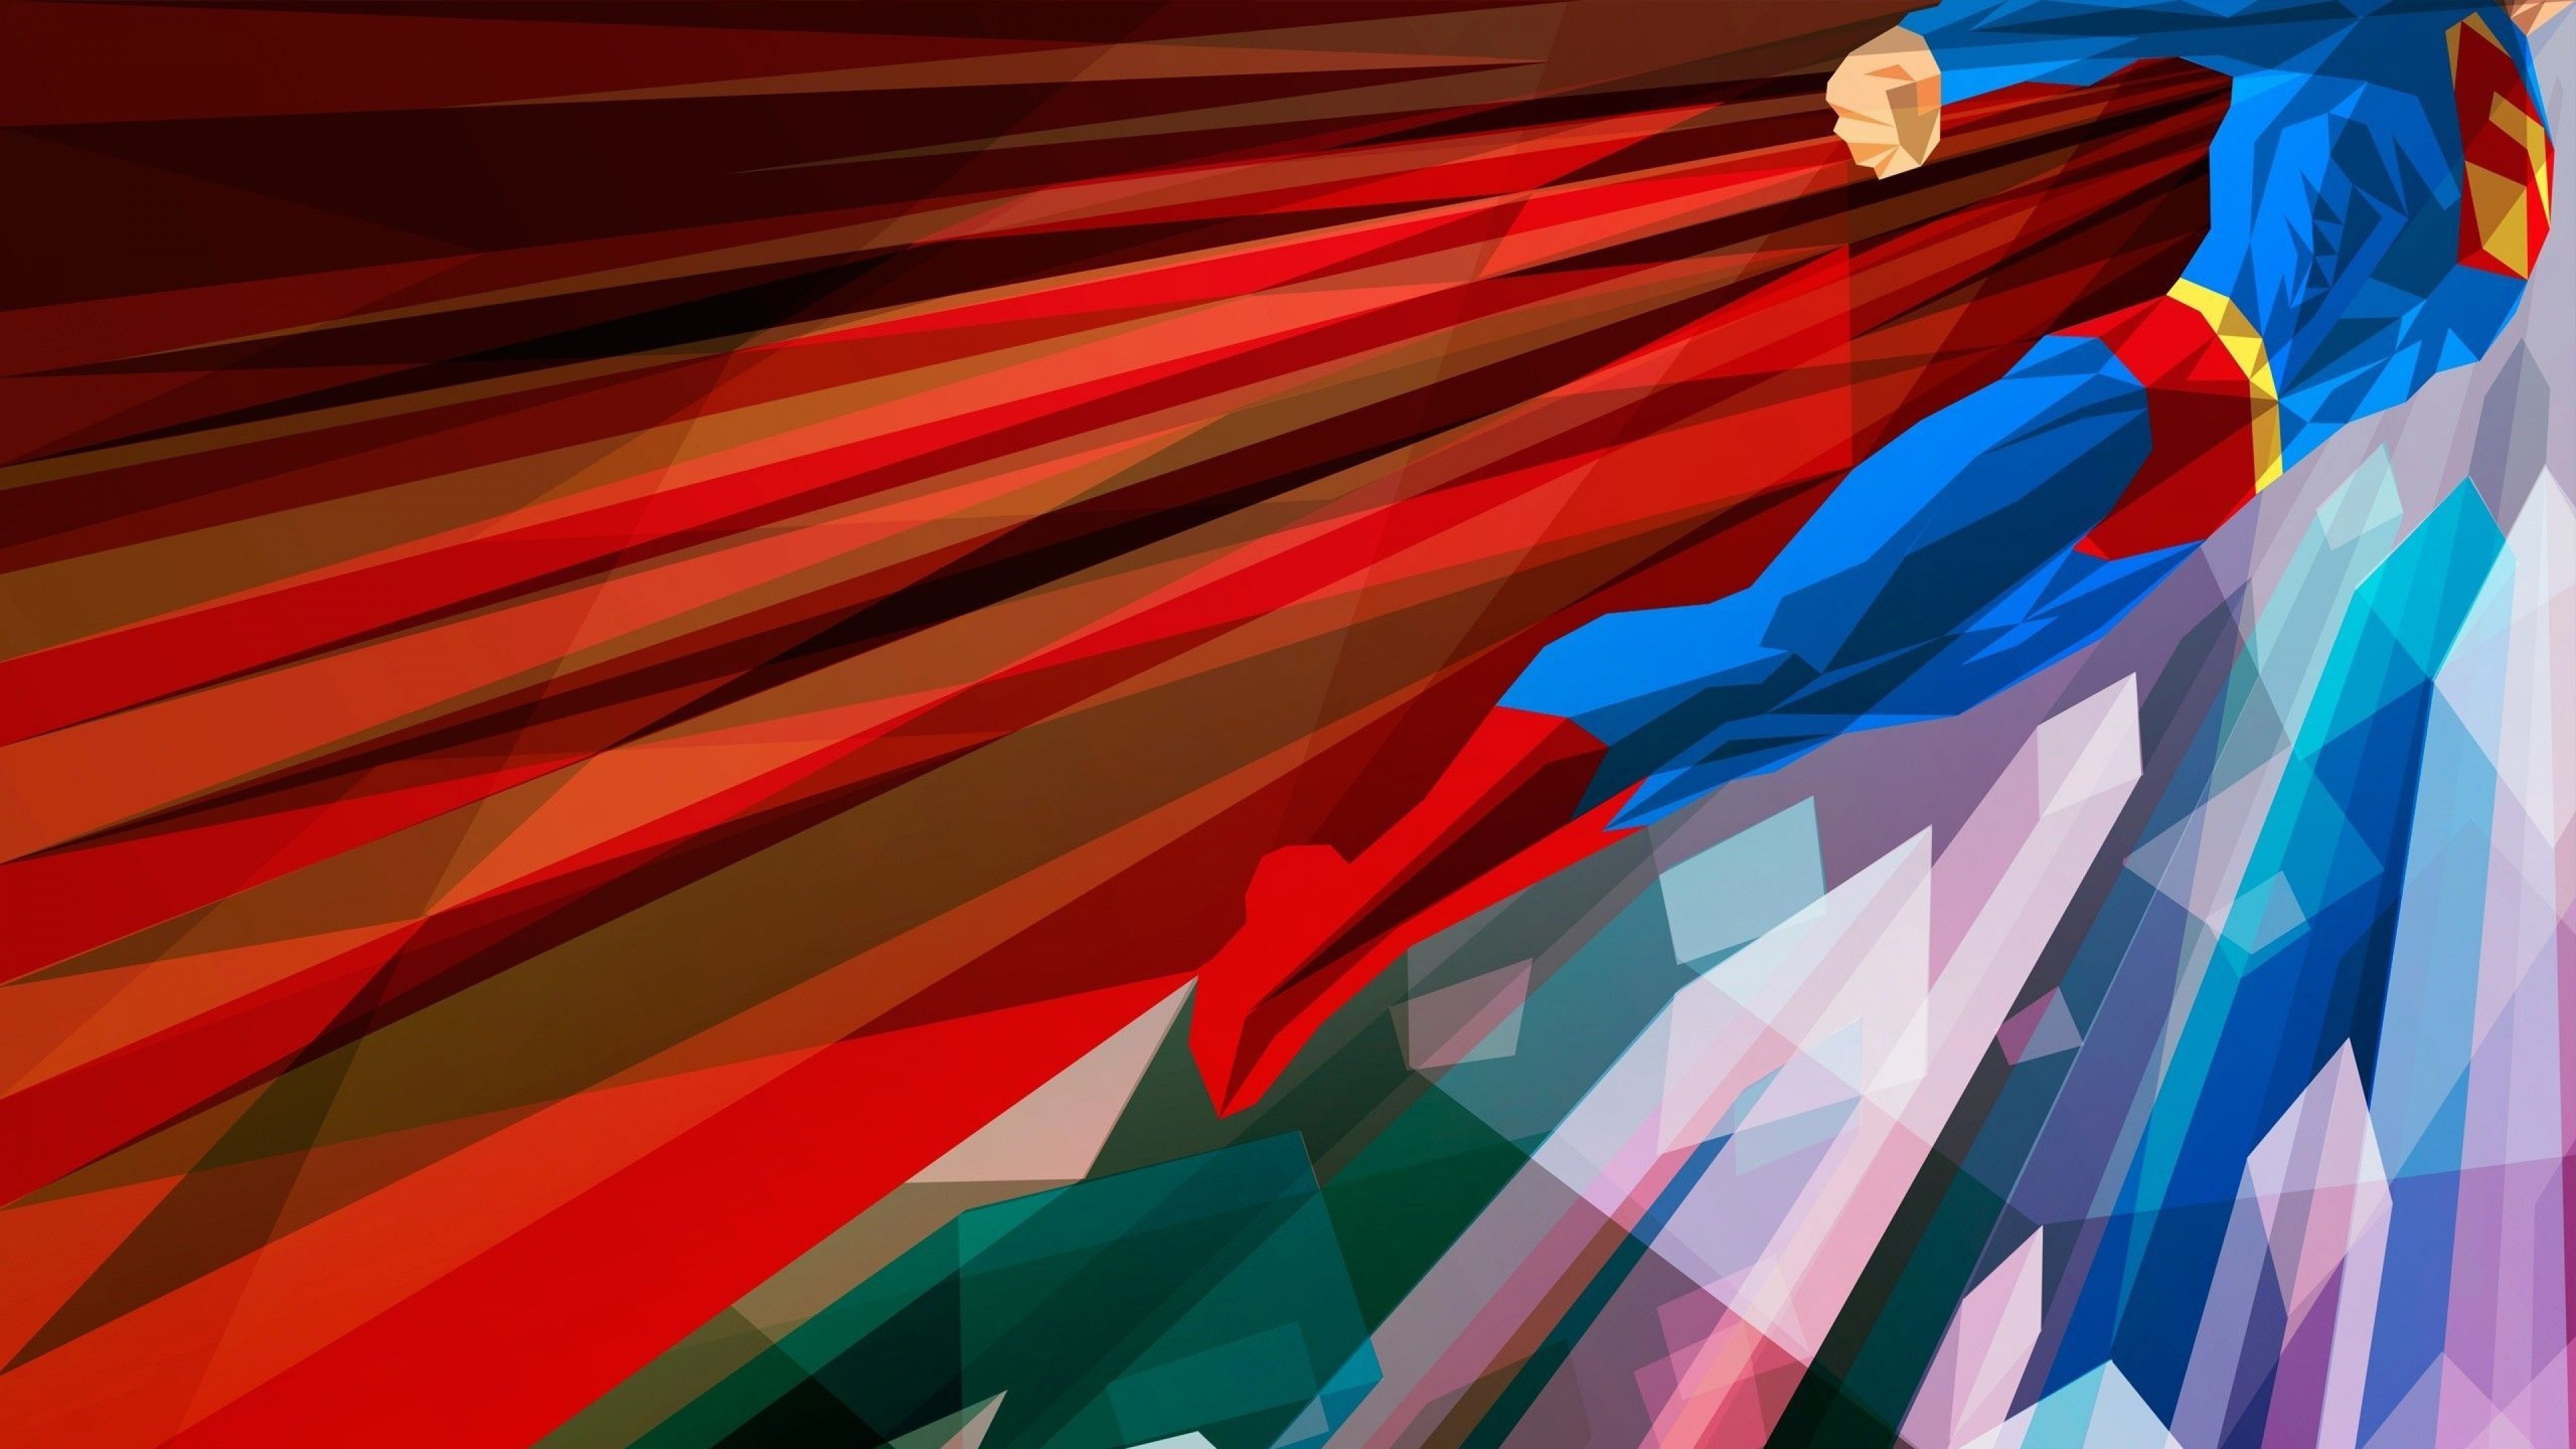 HD superman wallpapers | Peakpx